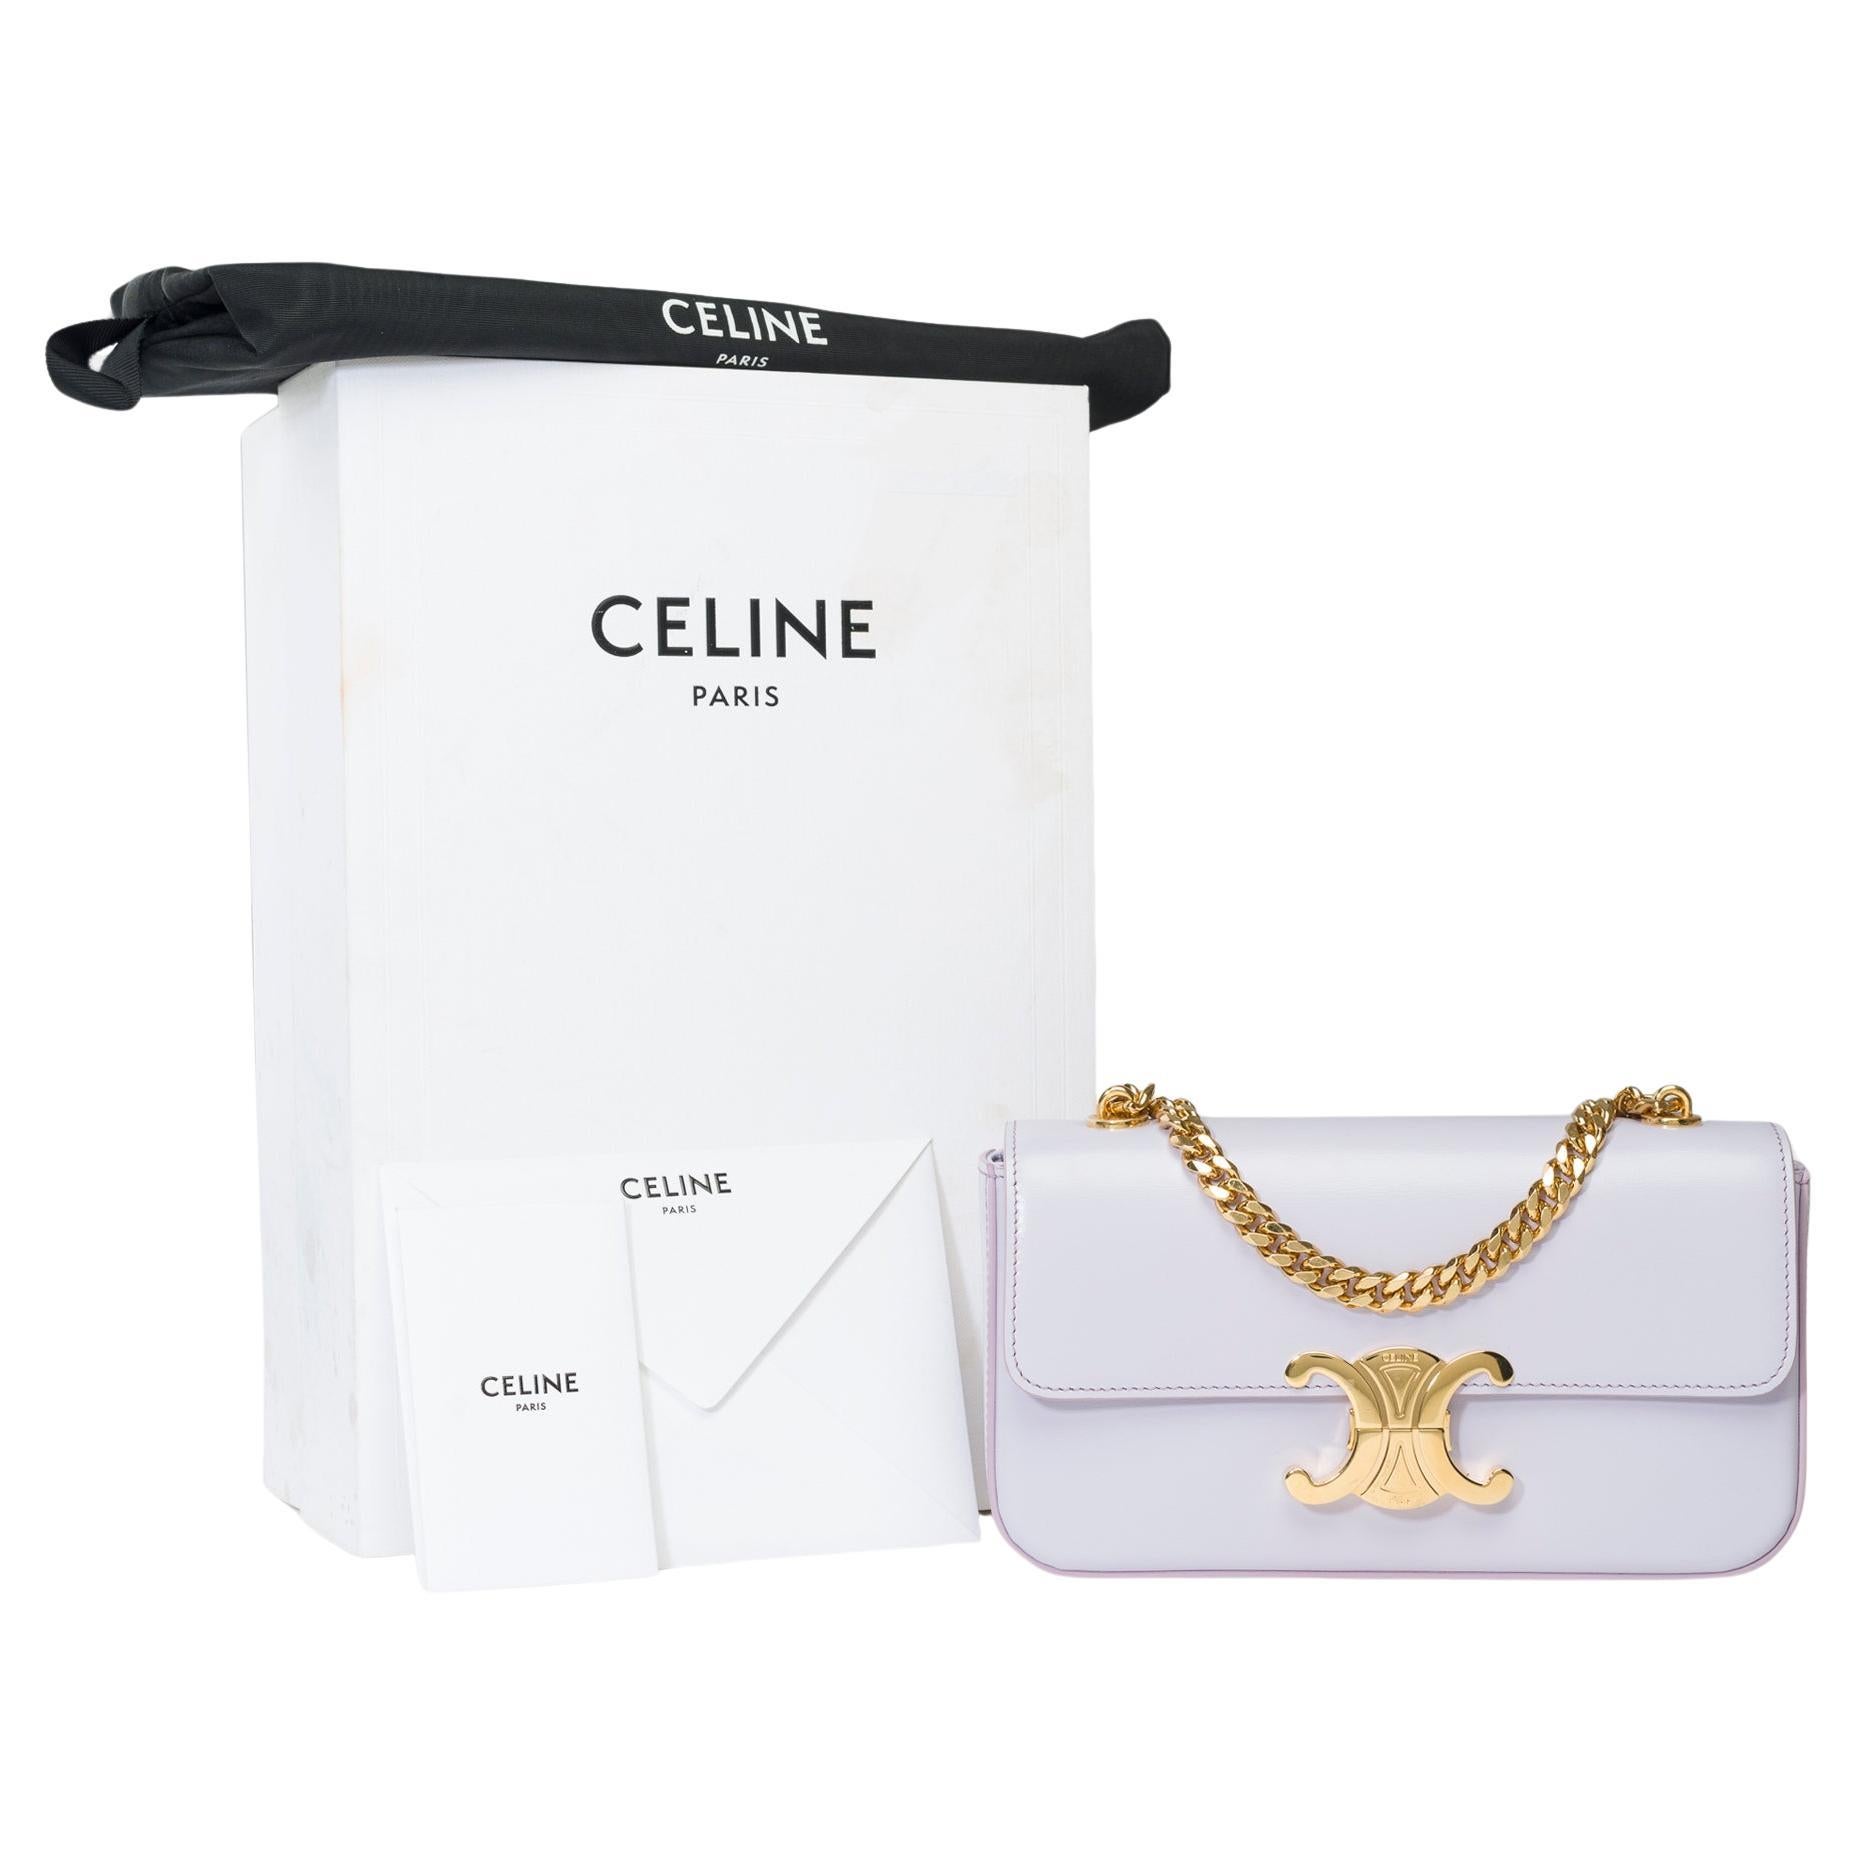 Celine Triomphe shoulder flap bag in satin lilac calf leather, GHW For Sale